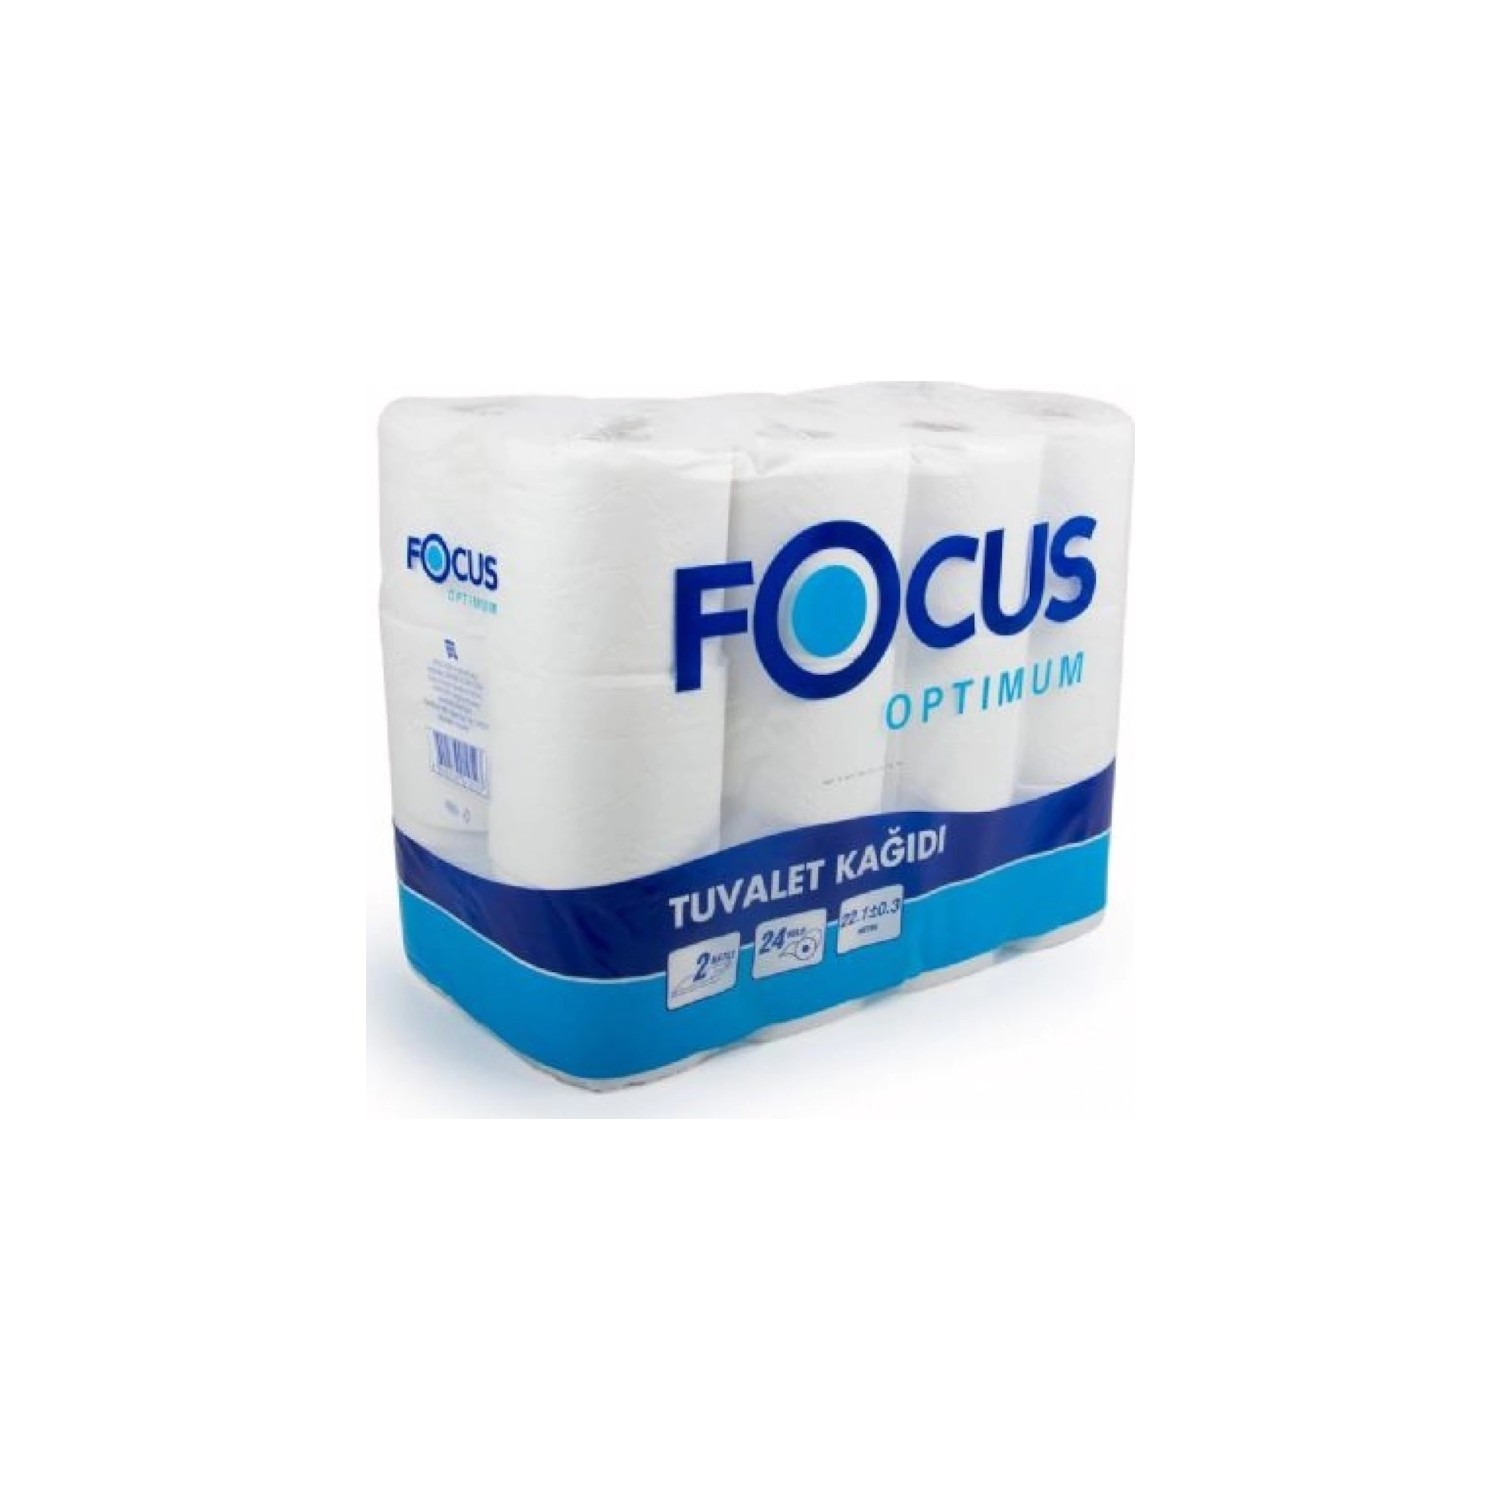 Focus Optimum Tuvalet Kağıdı (24*3 Adet)